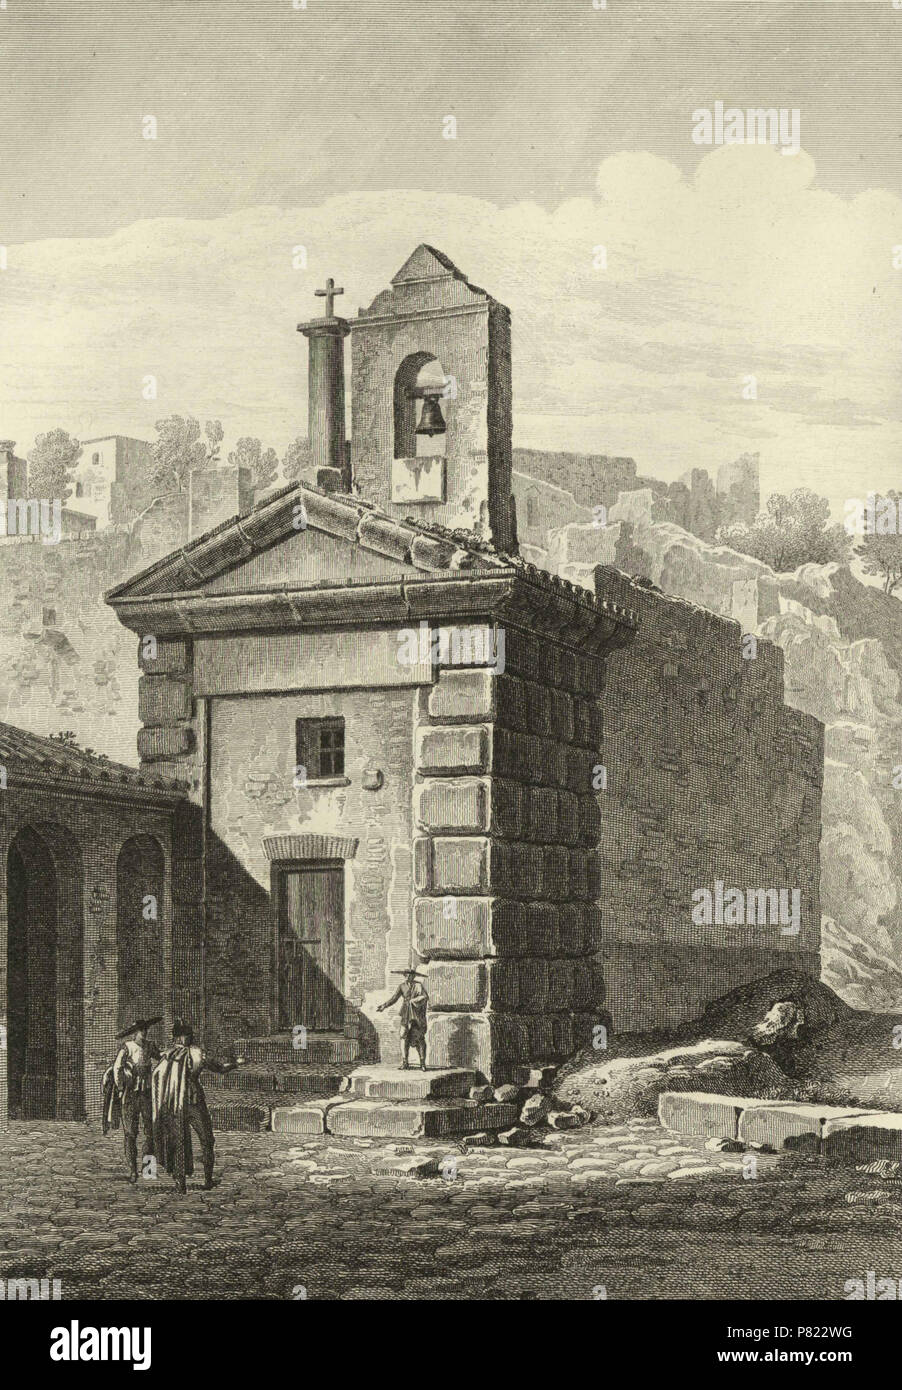 3 1806-1820, Voyage pittoresque et historique de l'Espagne, tomo I, Templo de Alcántara (cropped) Stock Photo